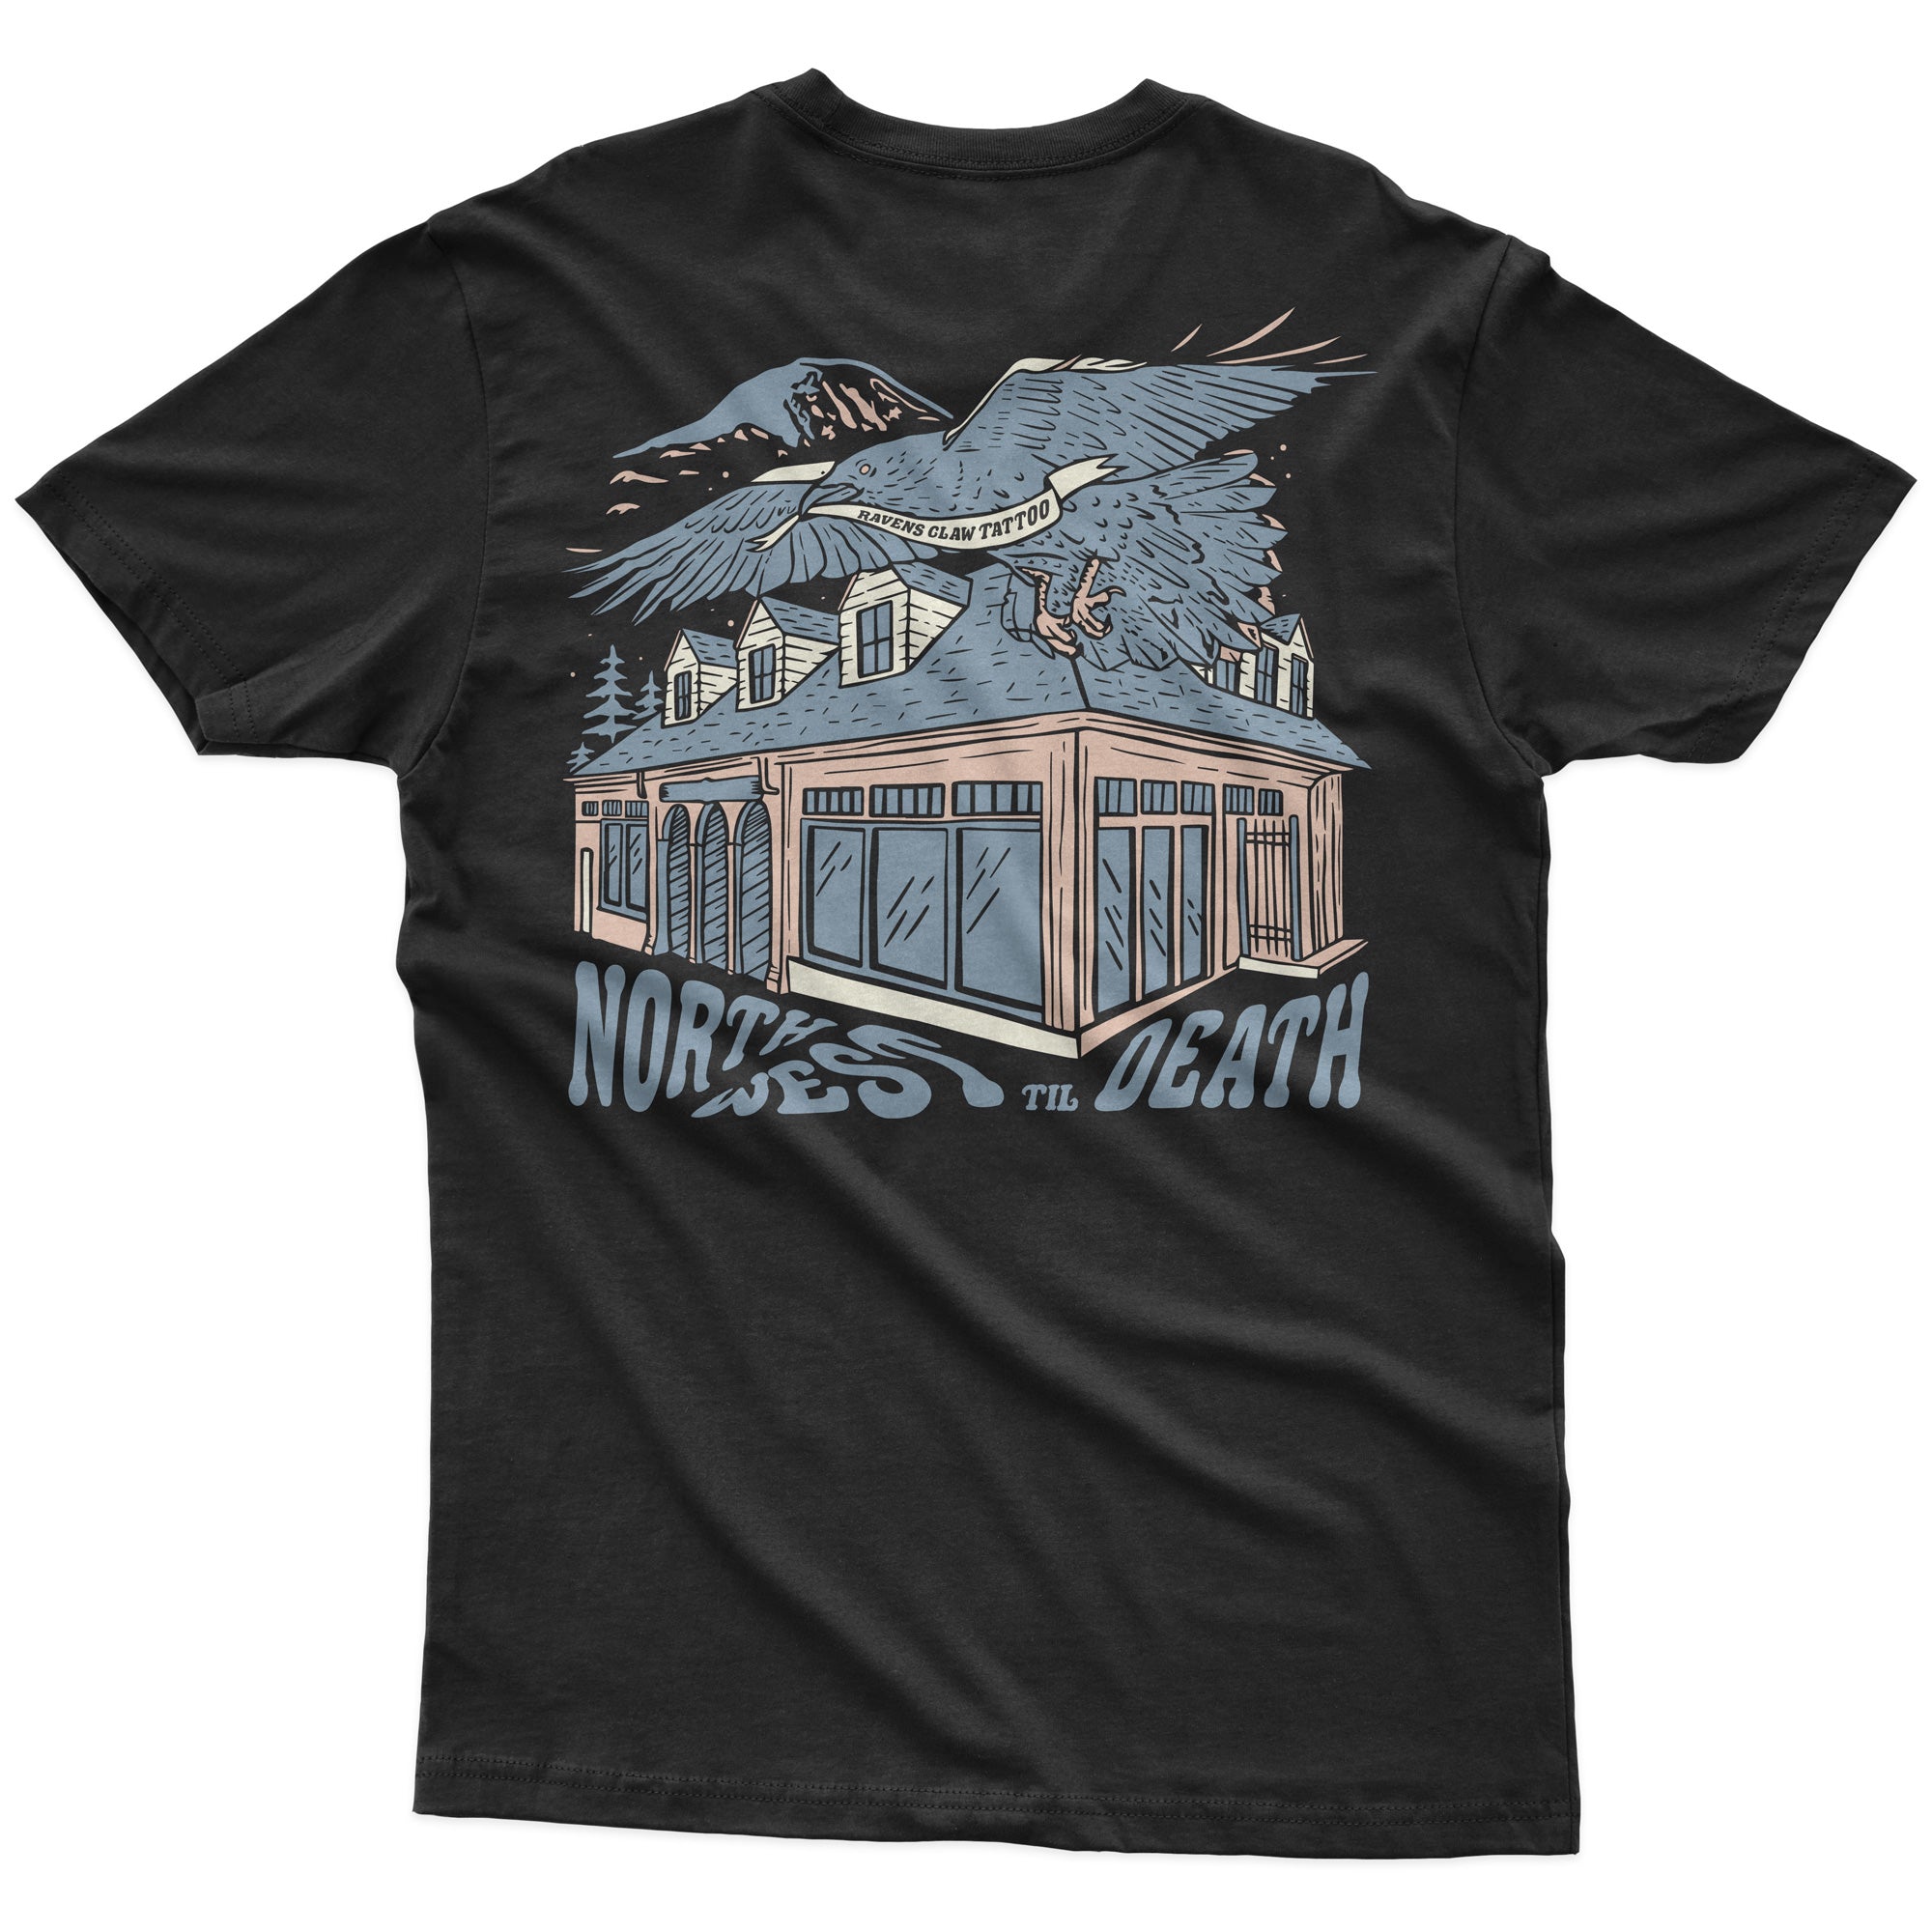 Ravens Claw x Northwest  til Death T-Shirt